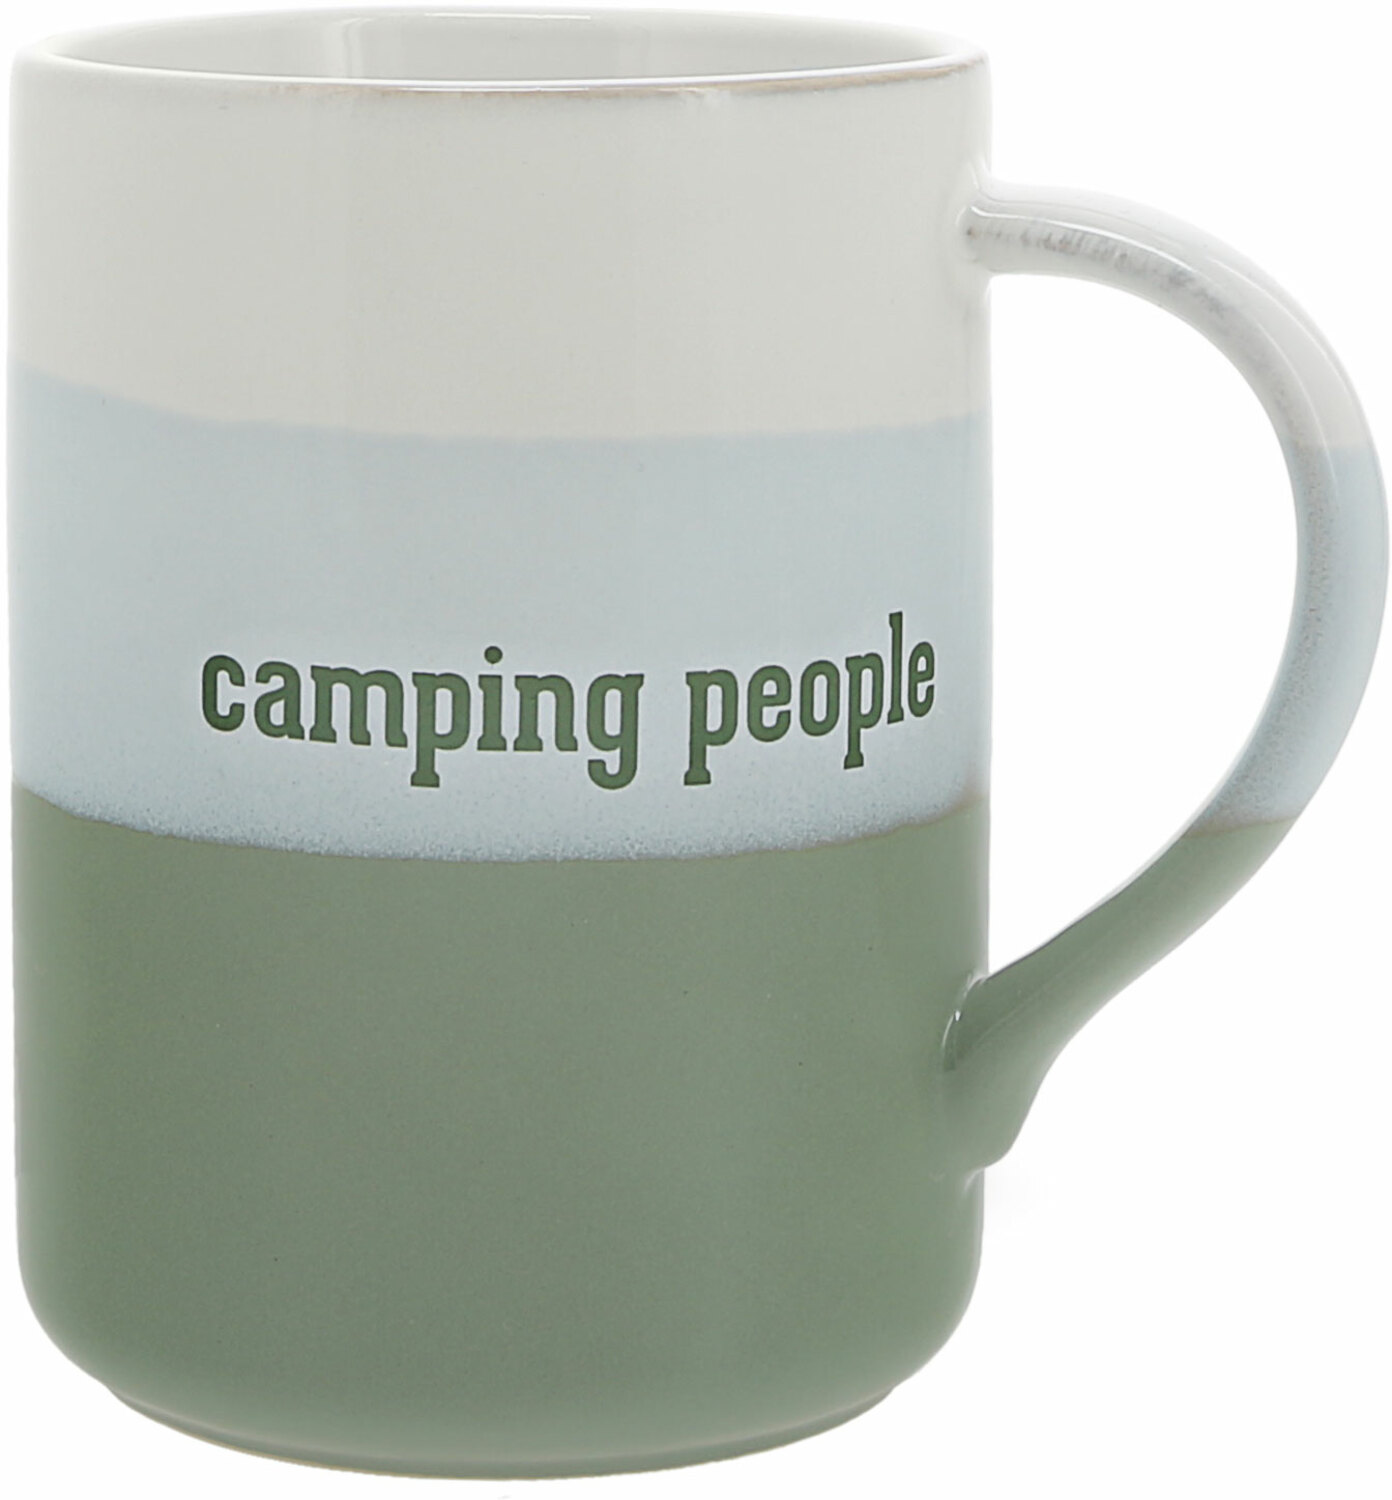 Camping People by We People - Camping People - 18 oz Mug